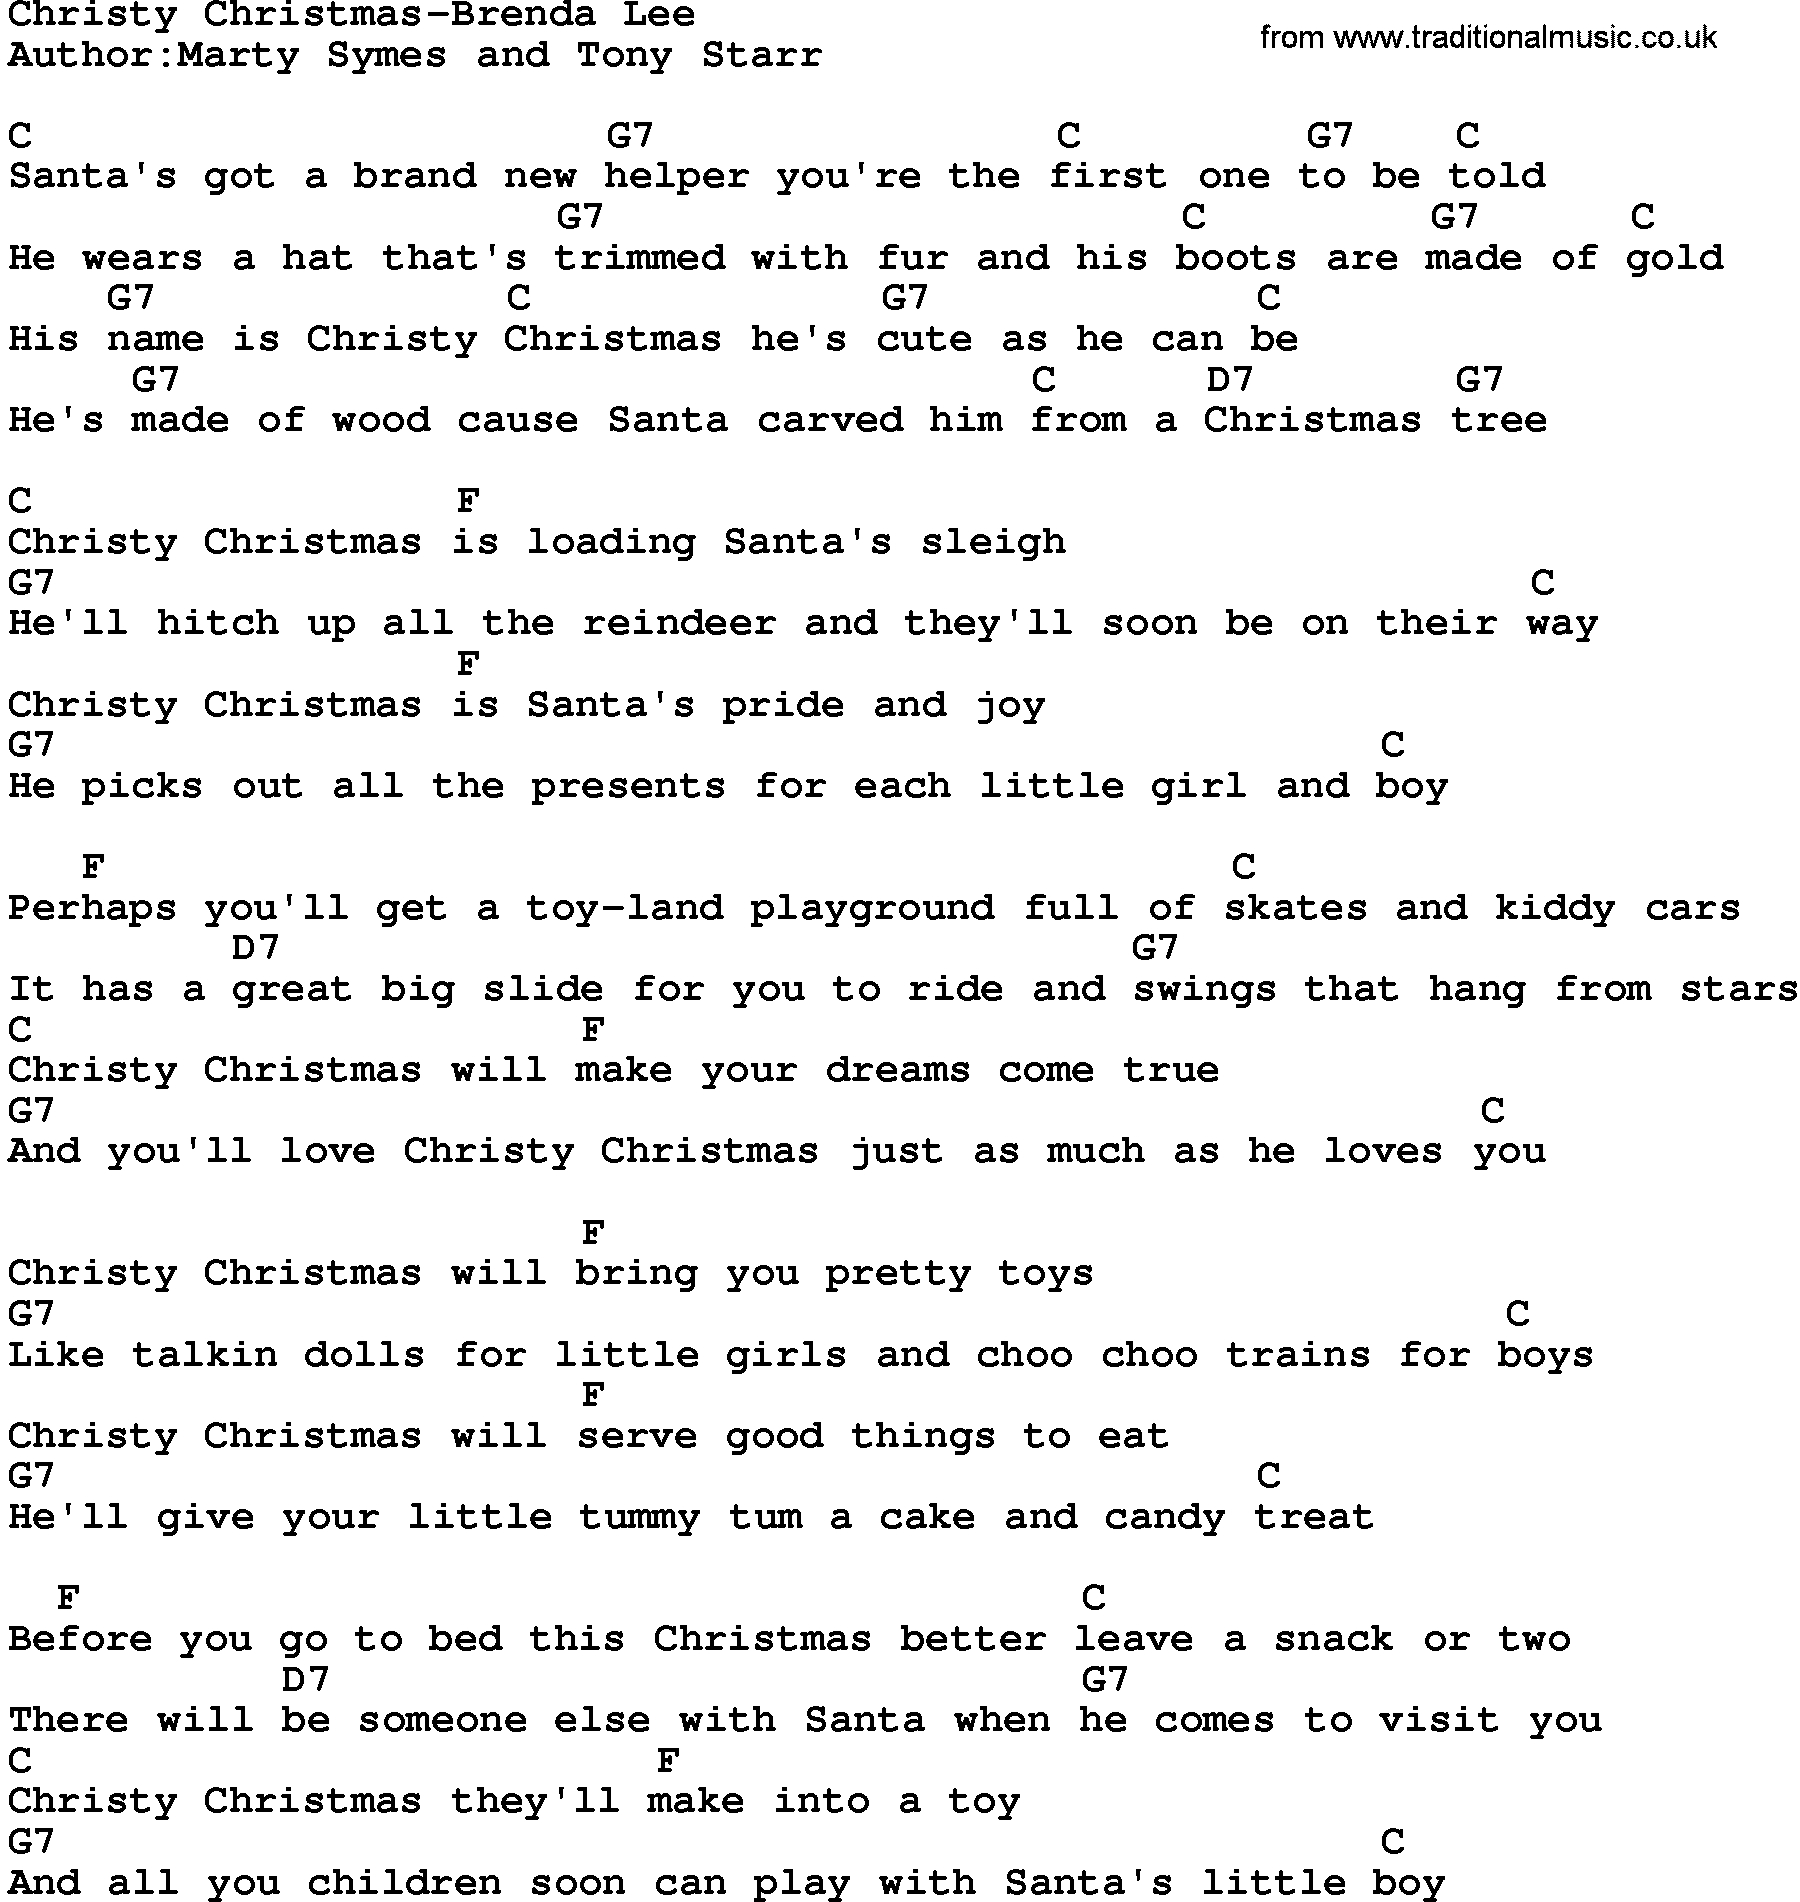 Riptide Guitar Chords Country Musicchristy Christmas Brenda Lee Lyrics And Chords